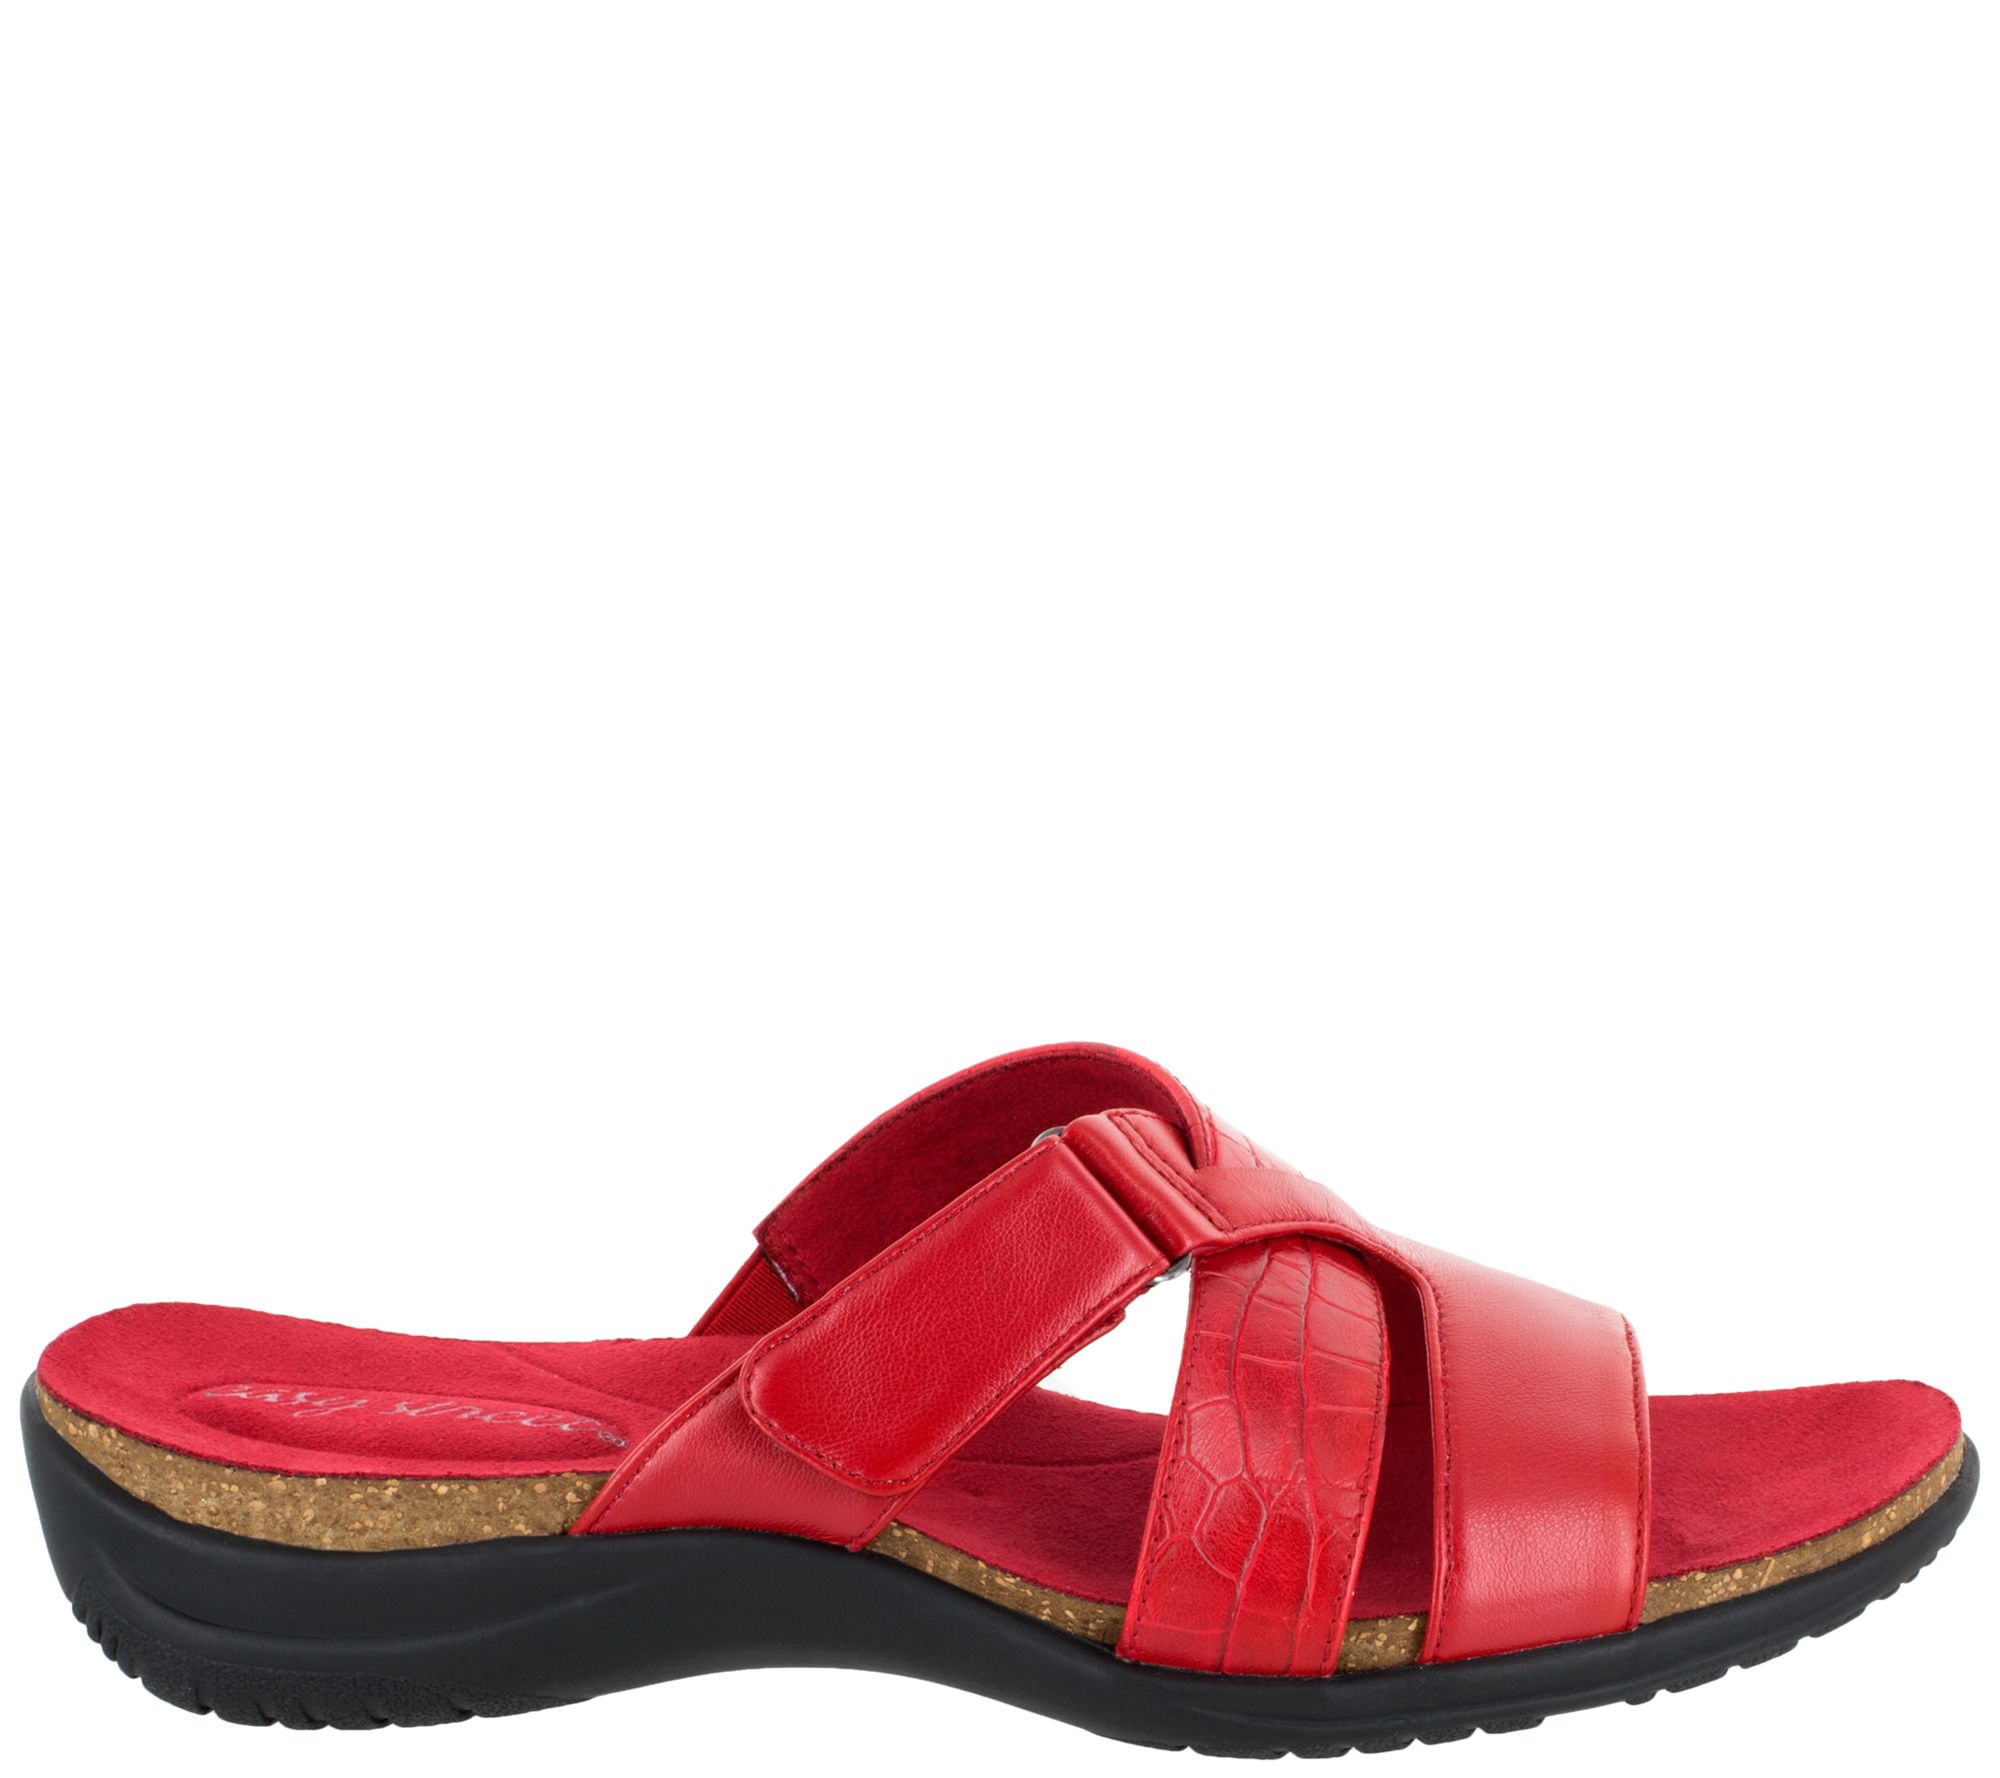 Easy Street Comfort Slide Sandals - Frenzy - QVC.com